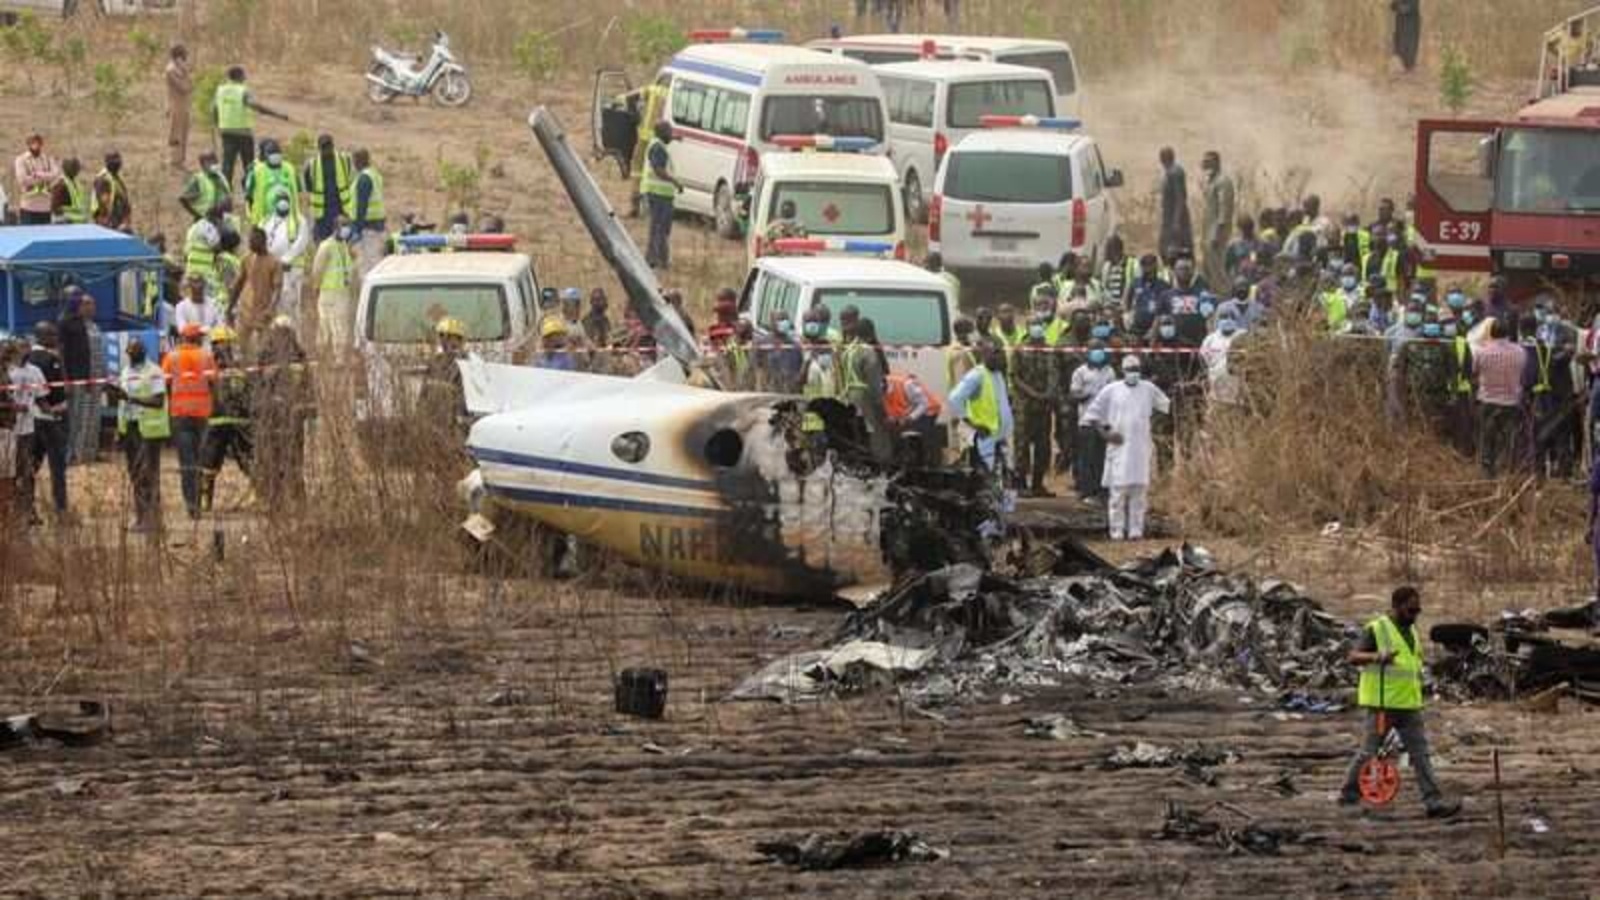 7 killed in Nigerian air force passenger plane crash outside Abuja airport